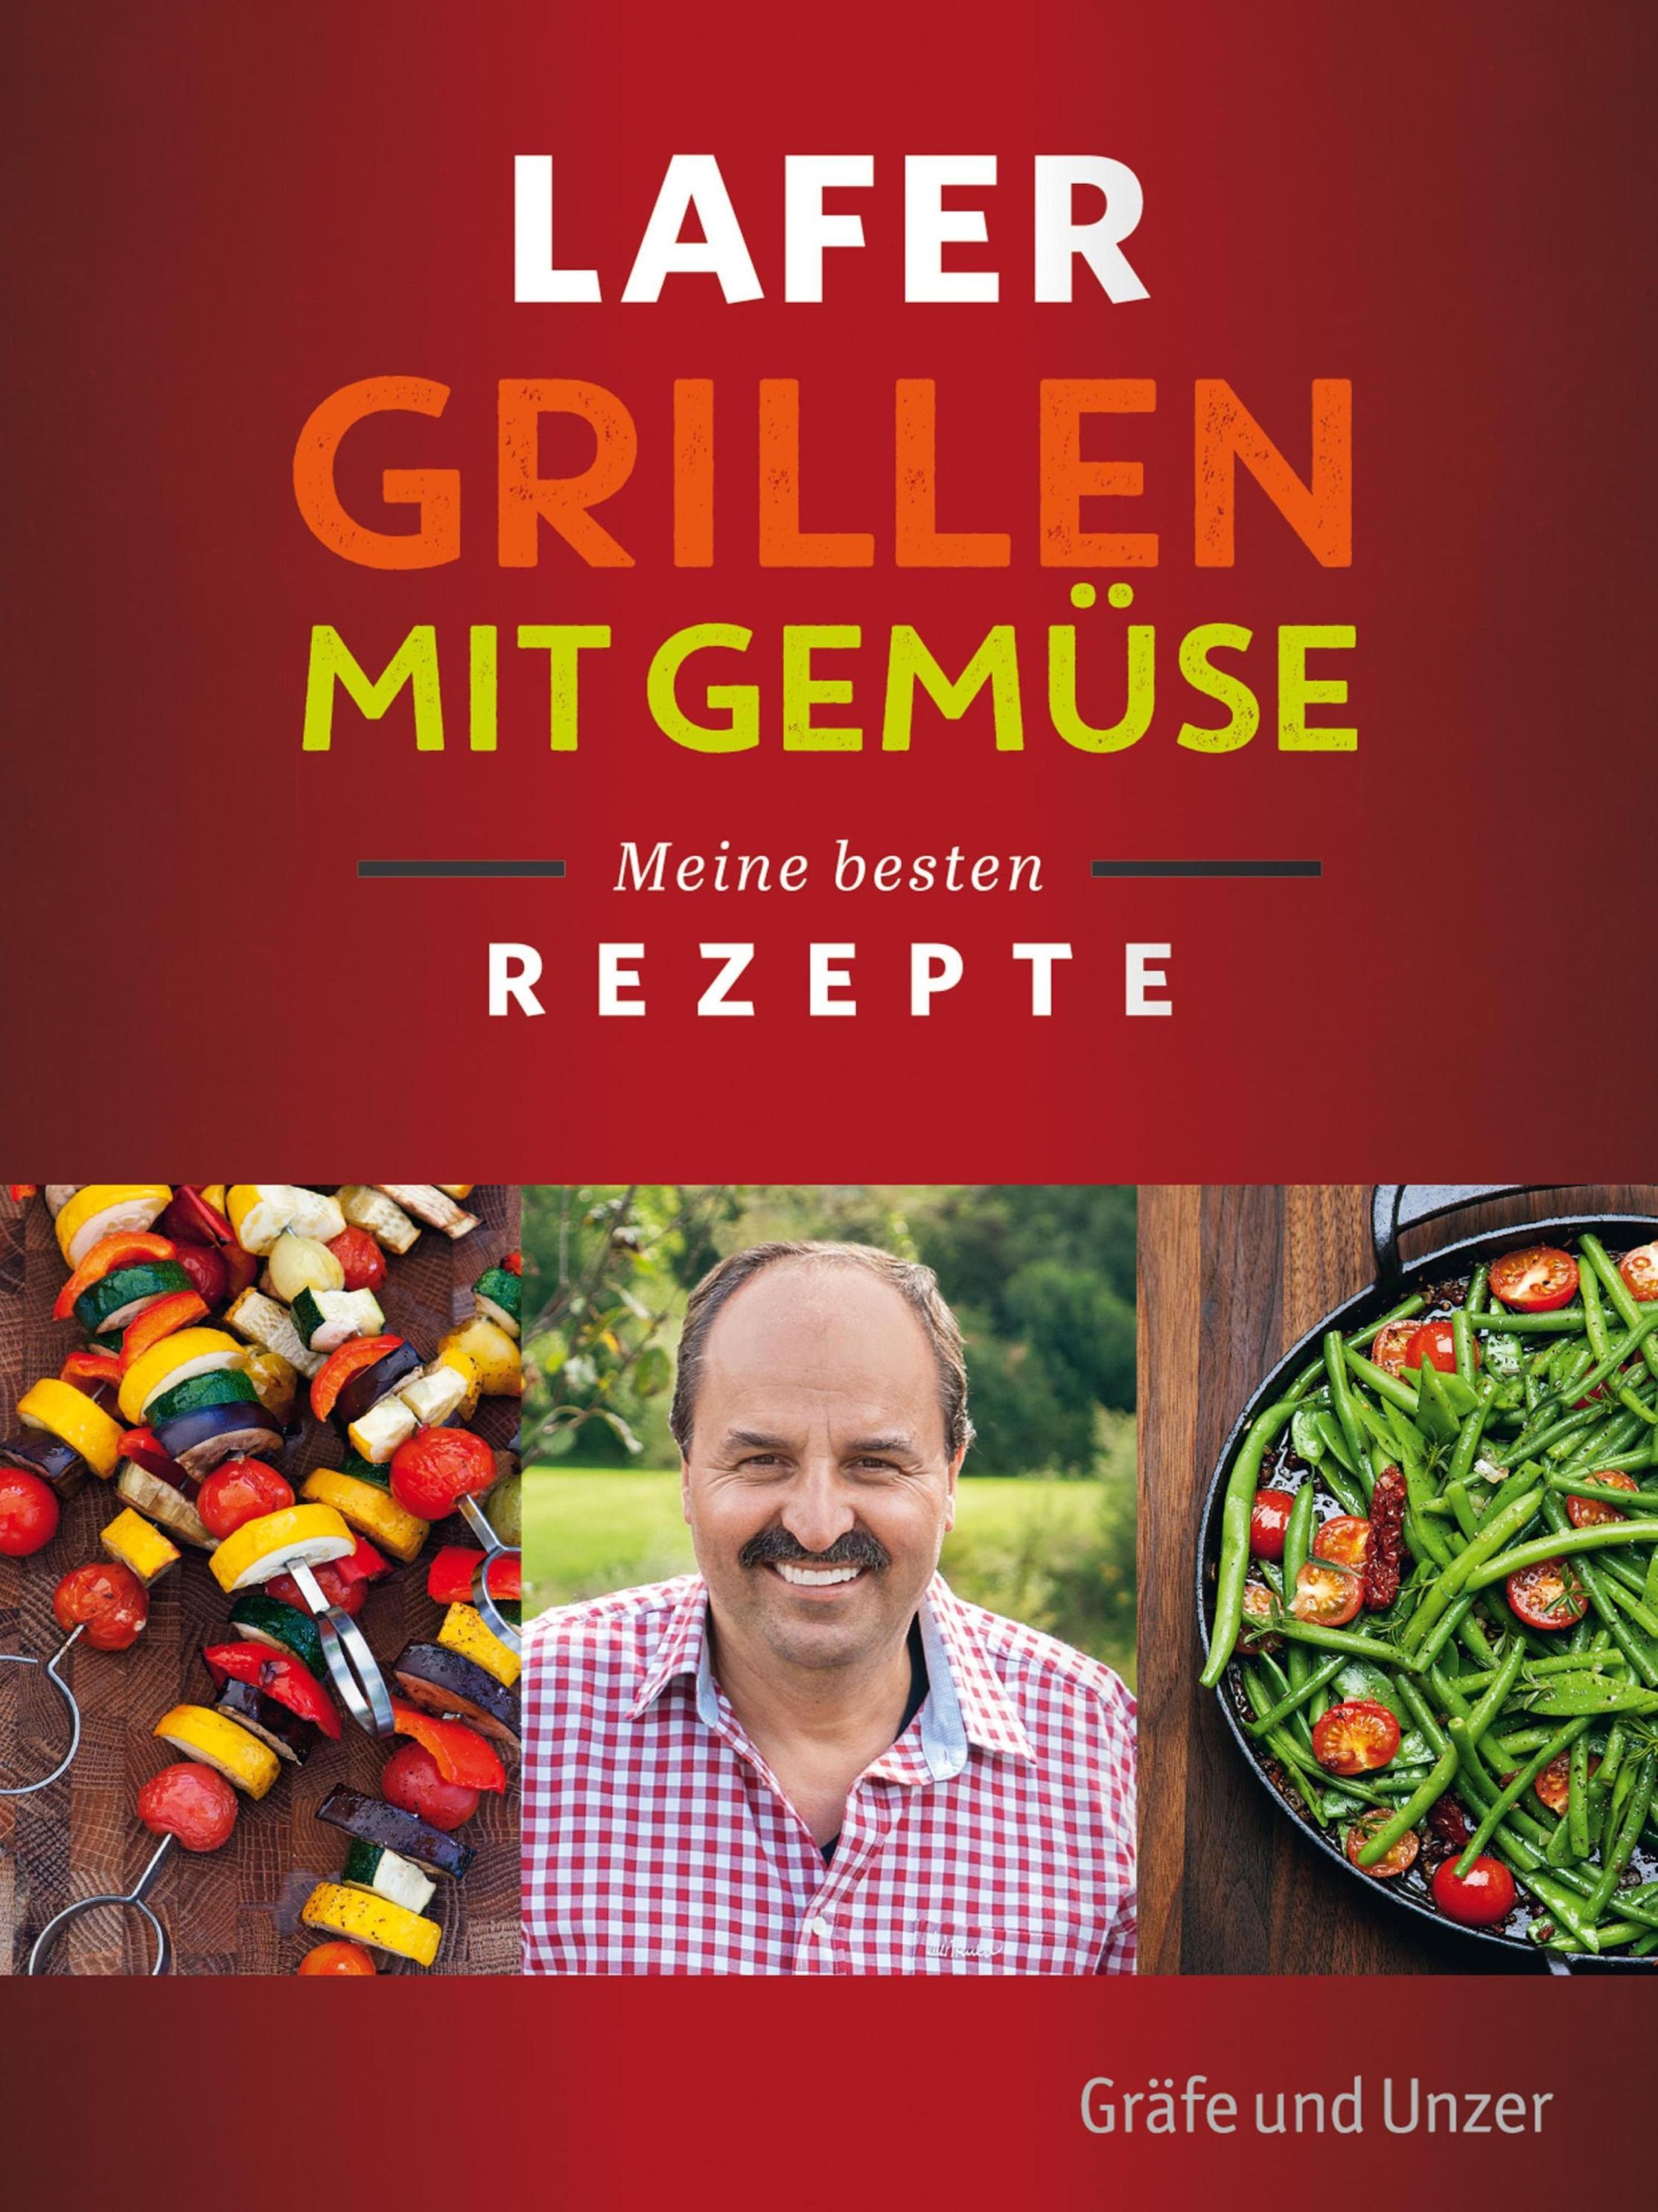 Lafer Grillen mit Gemüse eBook v. Johann Lafer | Weltbild